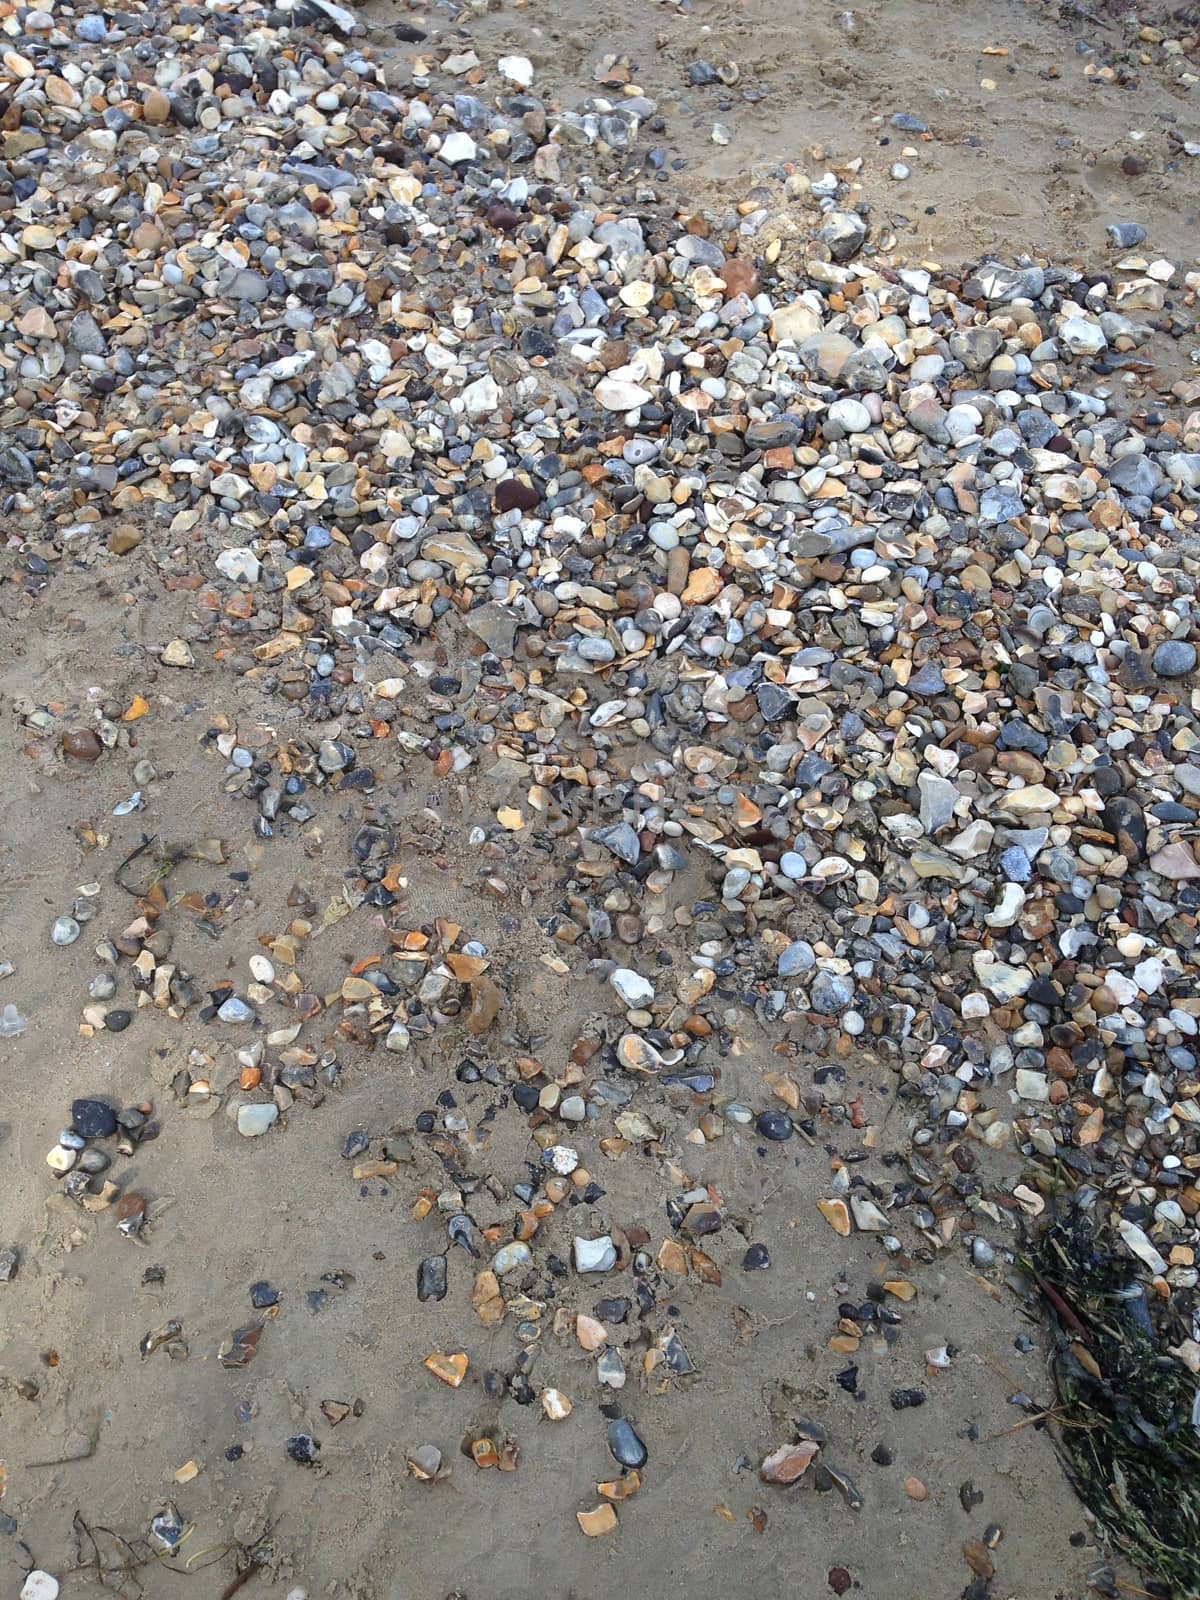 wet rocks on a sandy beach by chrisga